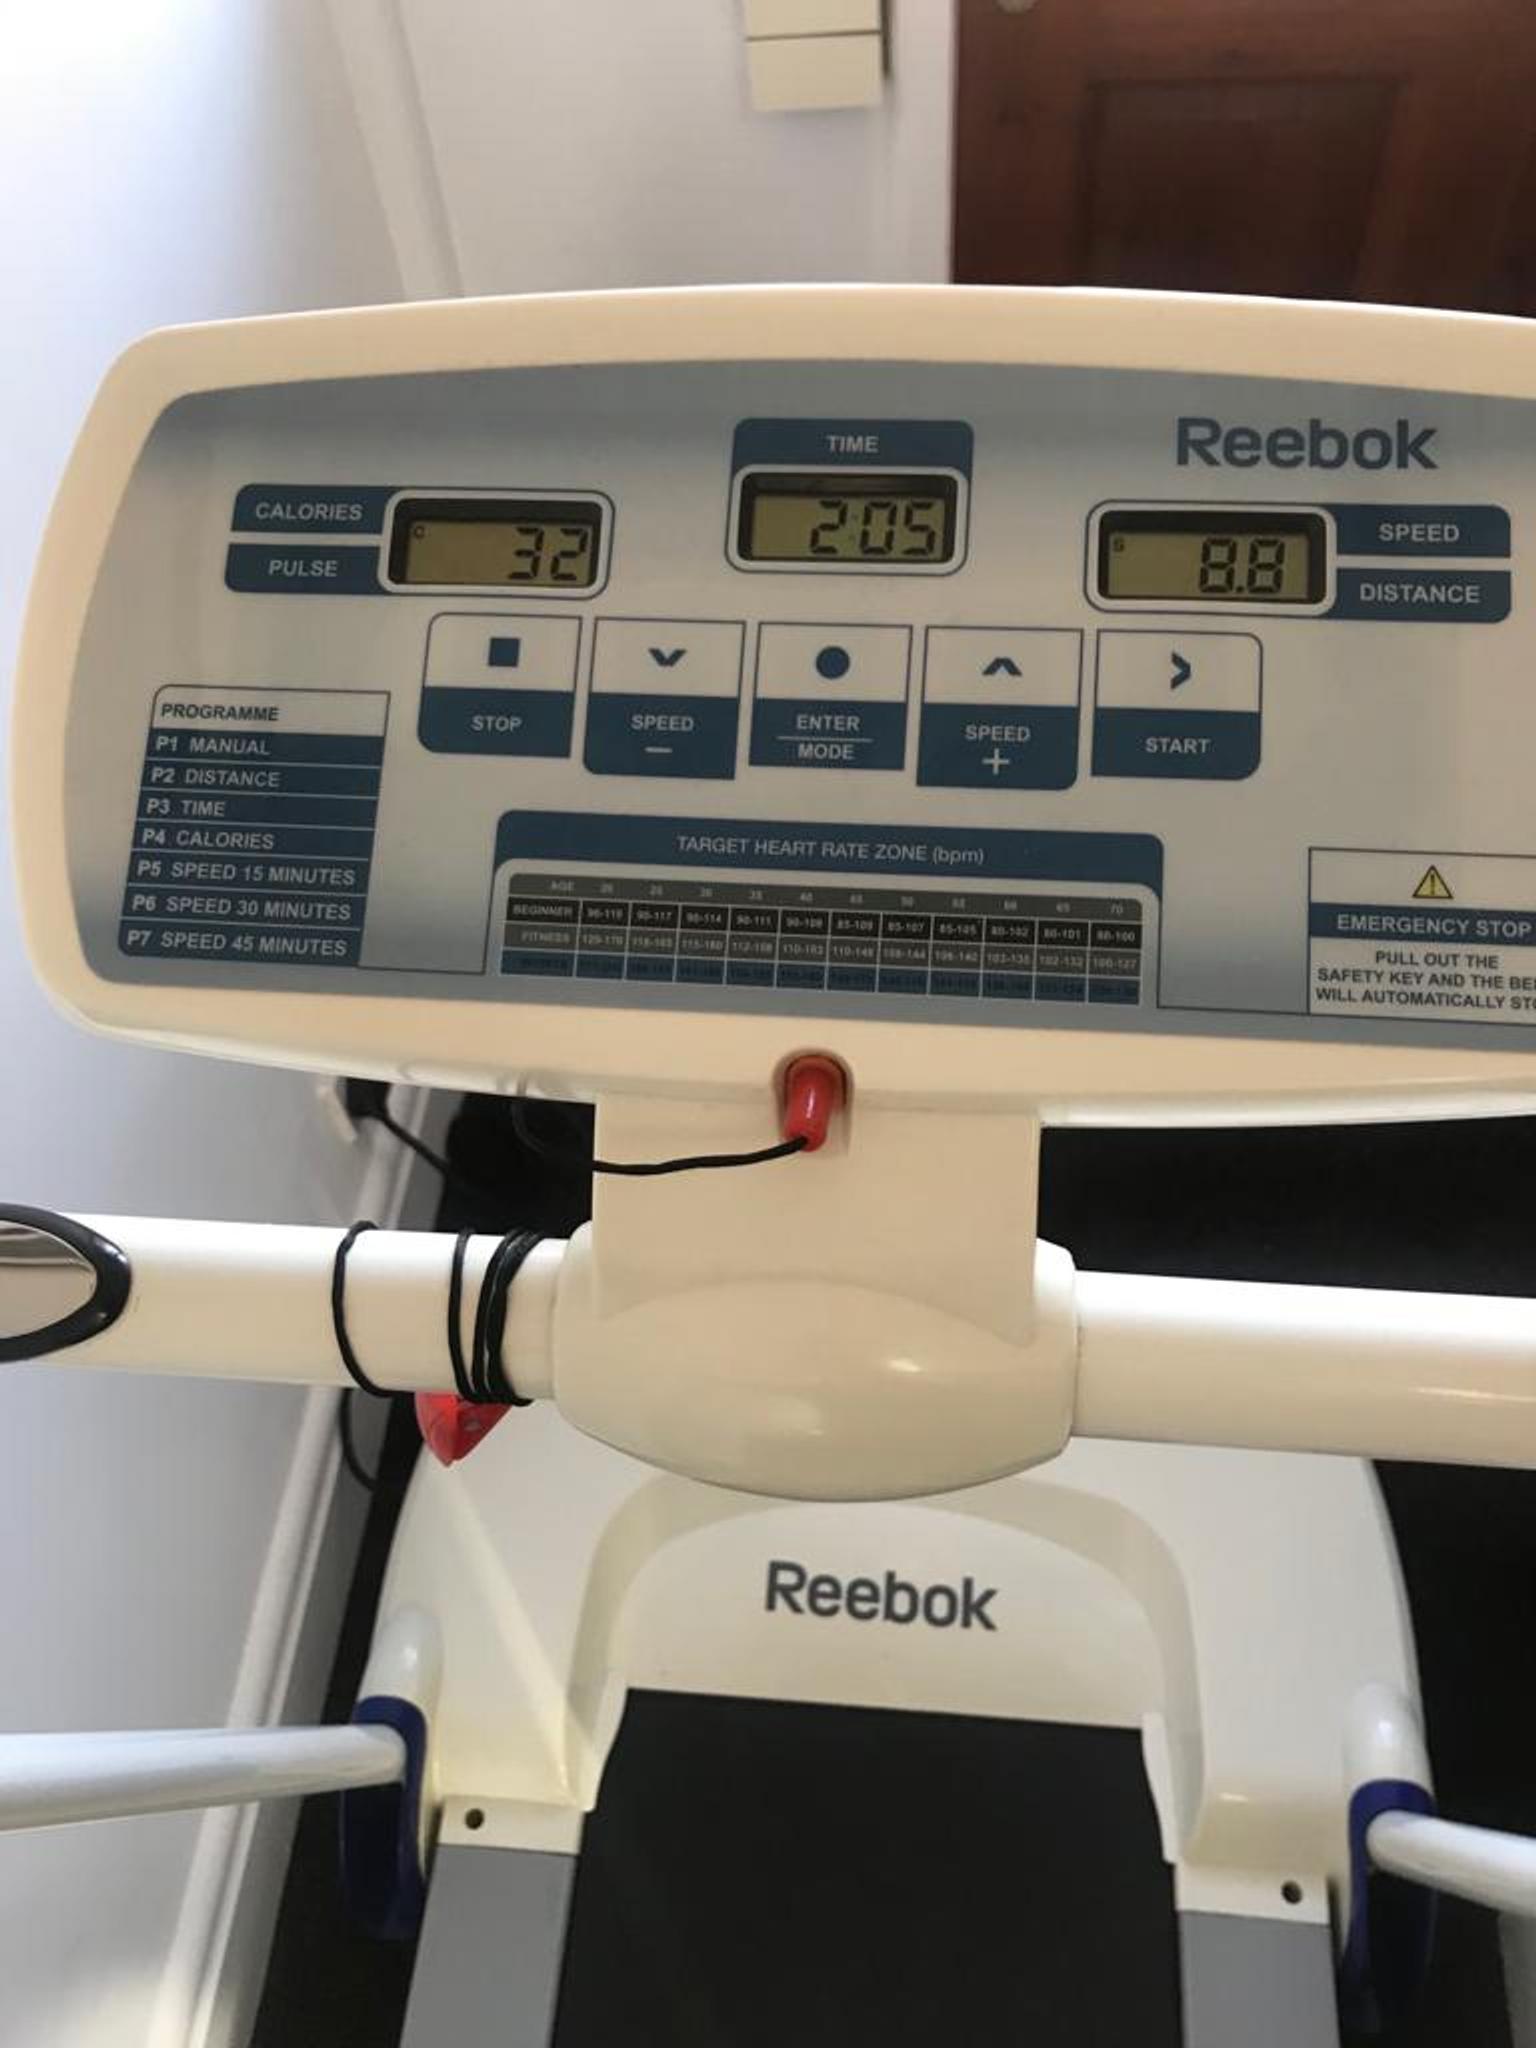 reebok ice treadmill - 57% OFF 